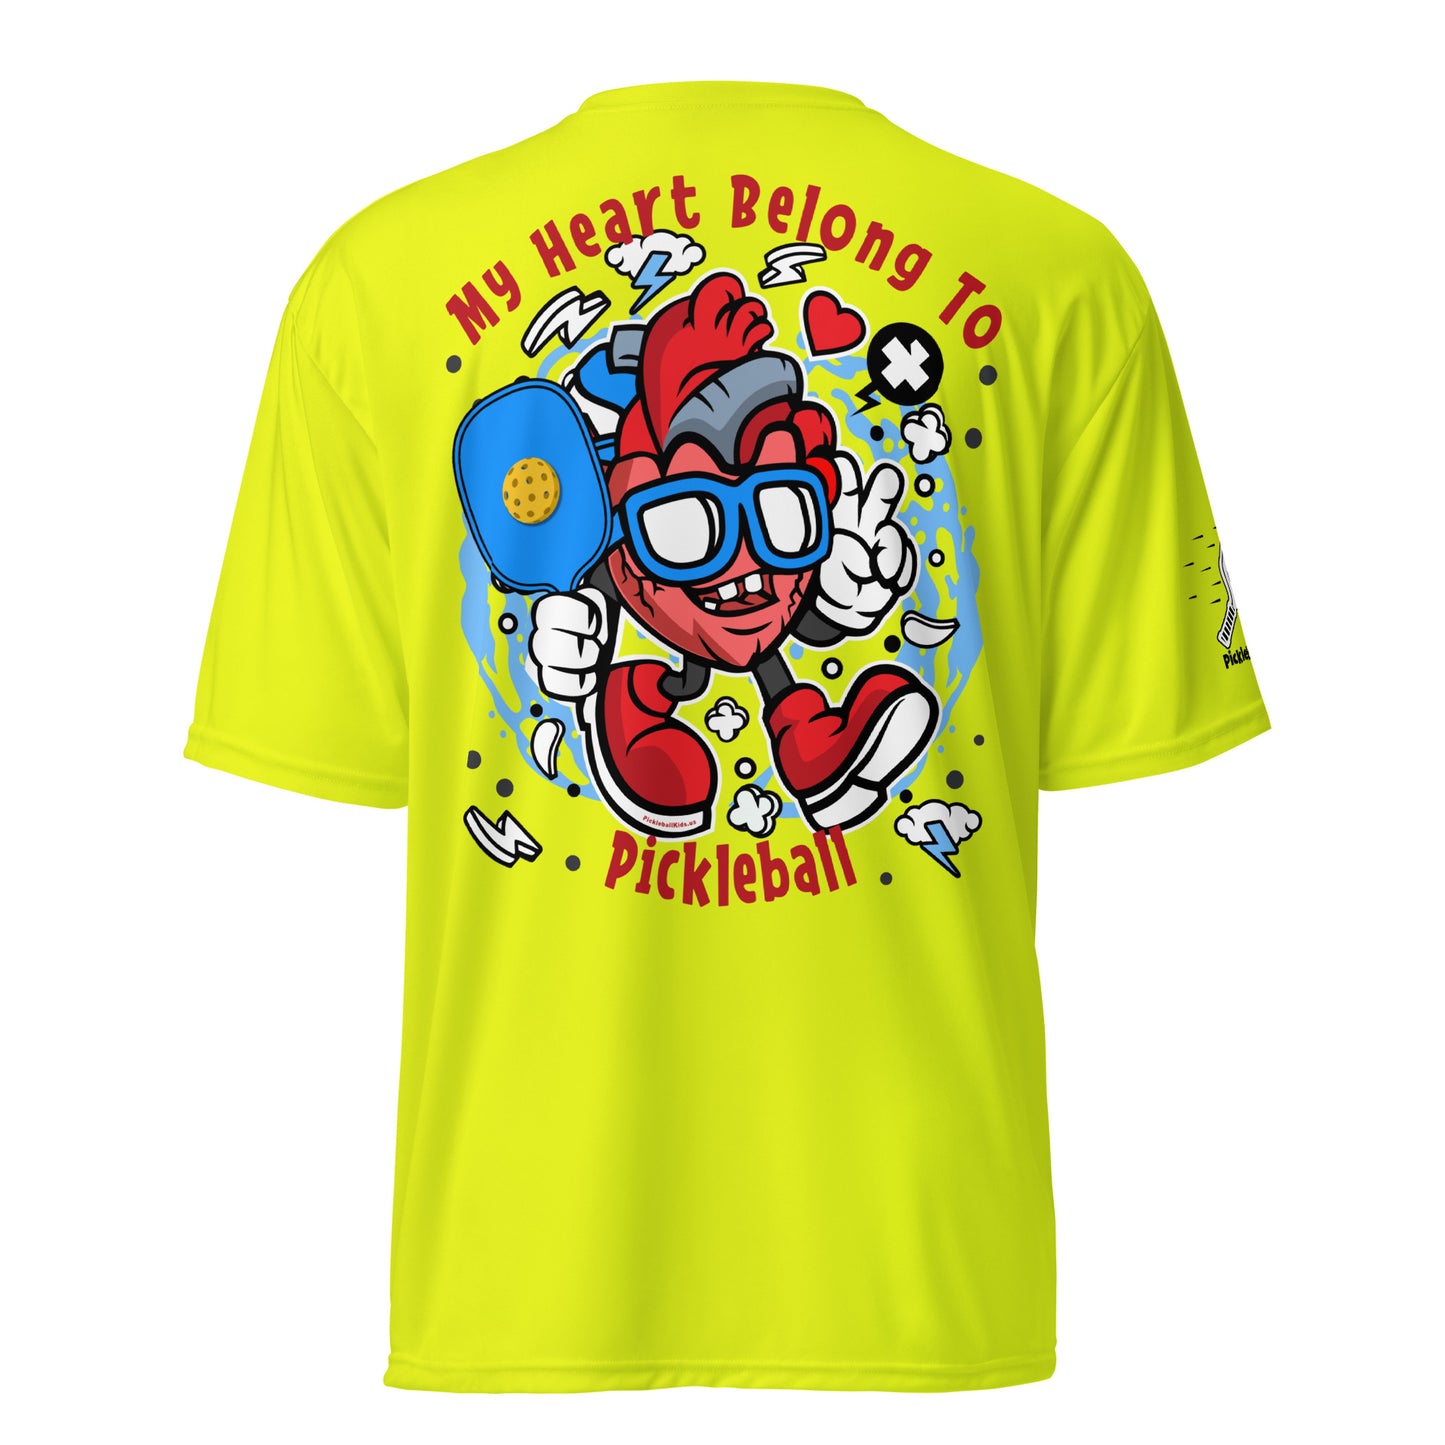 "My Heart Belongs To Pickleball" Unisex Performance Crew Neck T-Shirt